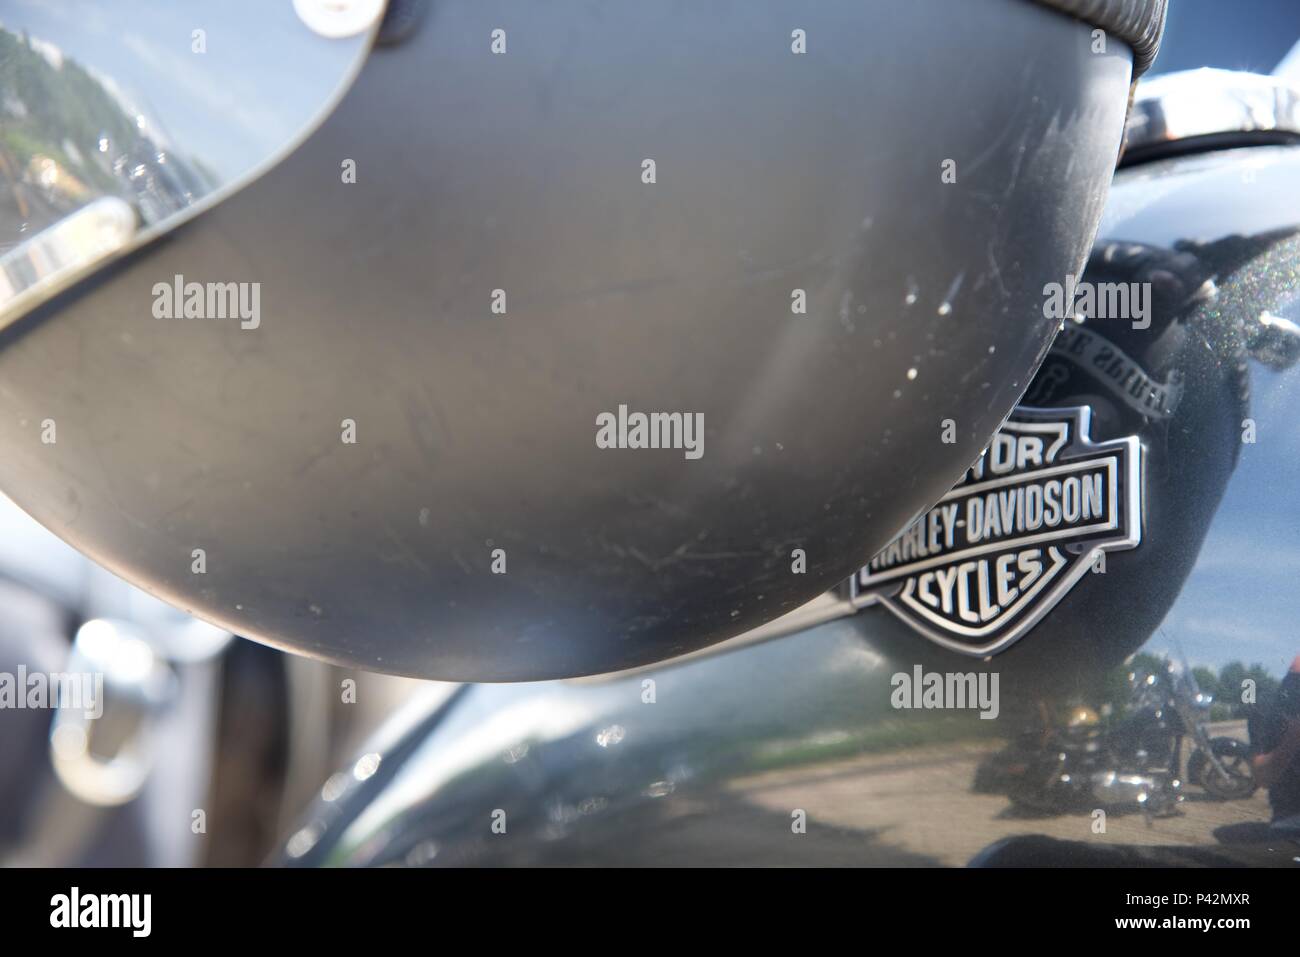 Harley Davidson: close ups and deatails of Harley Davidson motorcycles Stock Photo